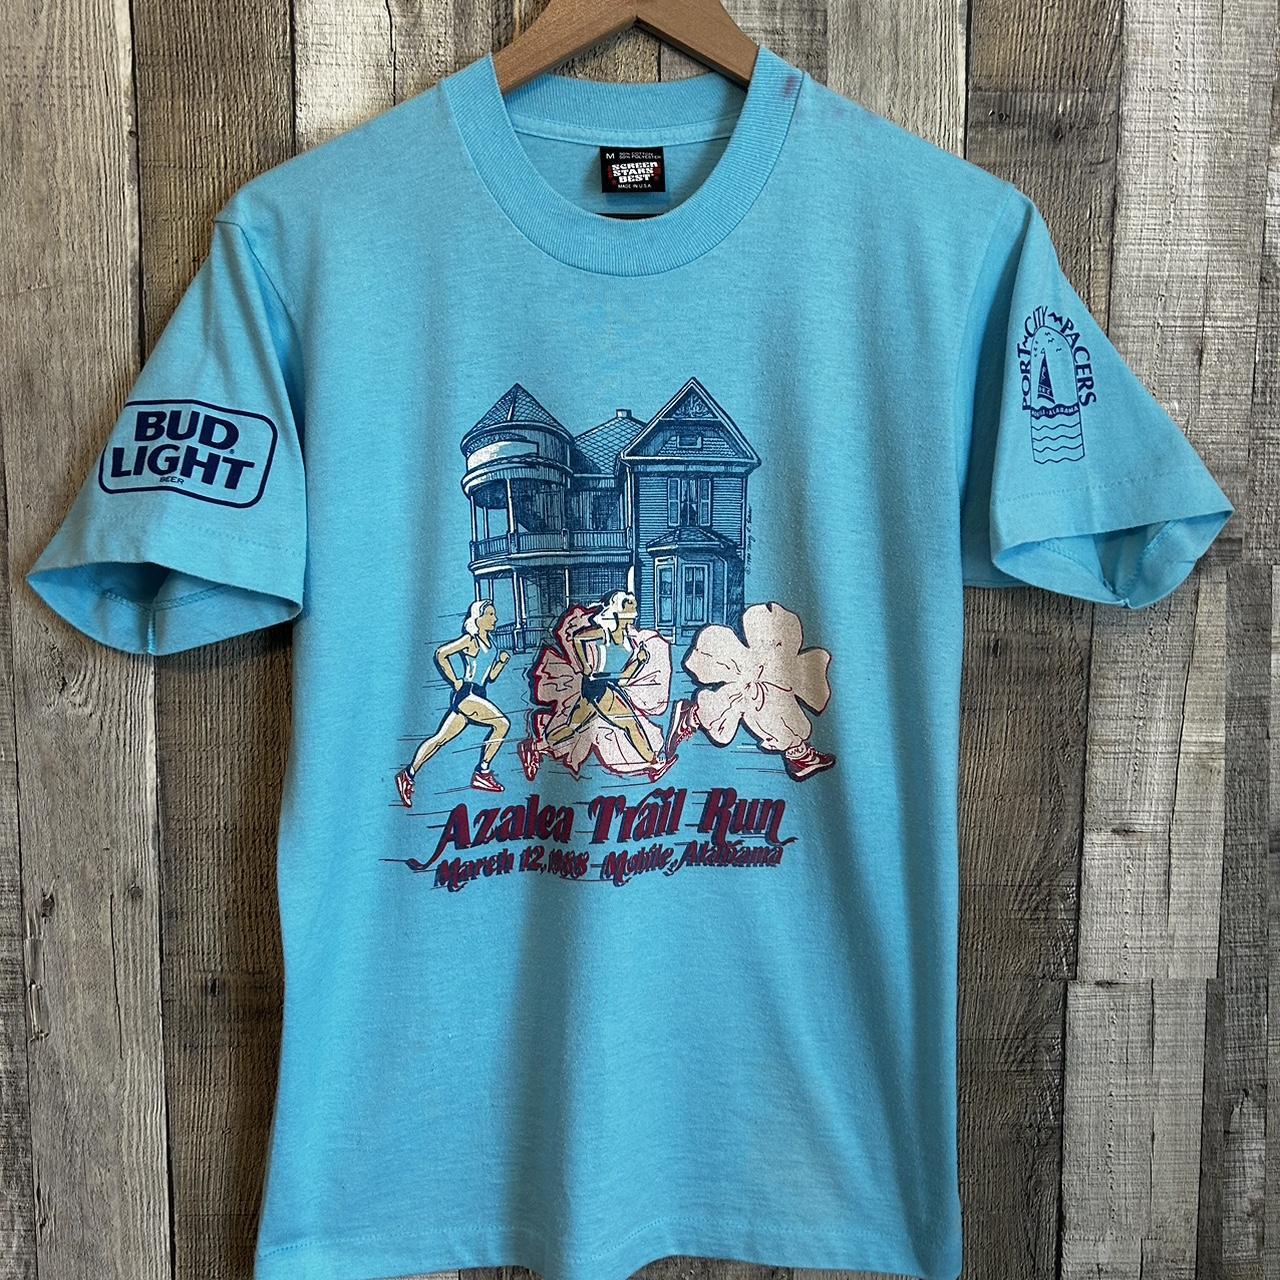 Vintage 1980s Marathon Bud Light Graphic Tshirt...